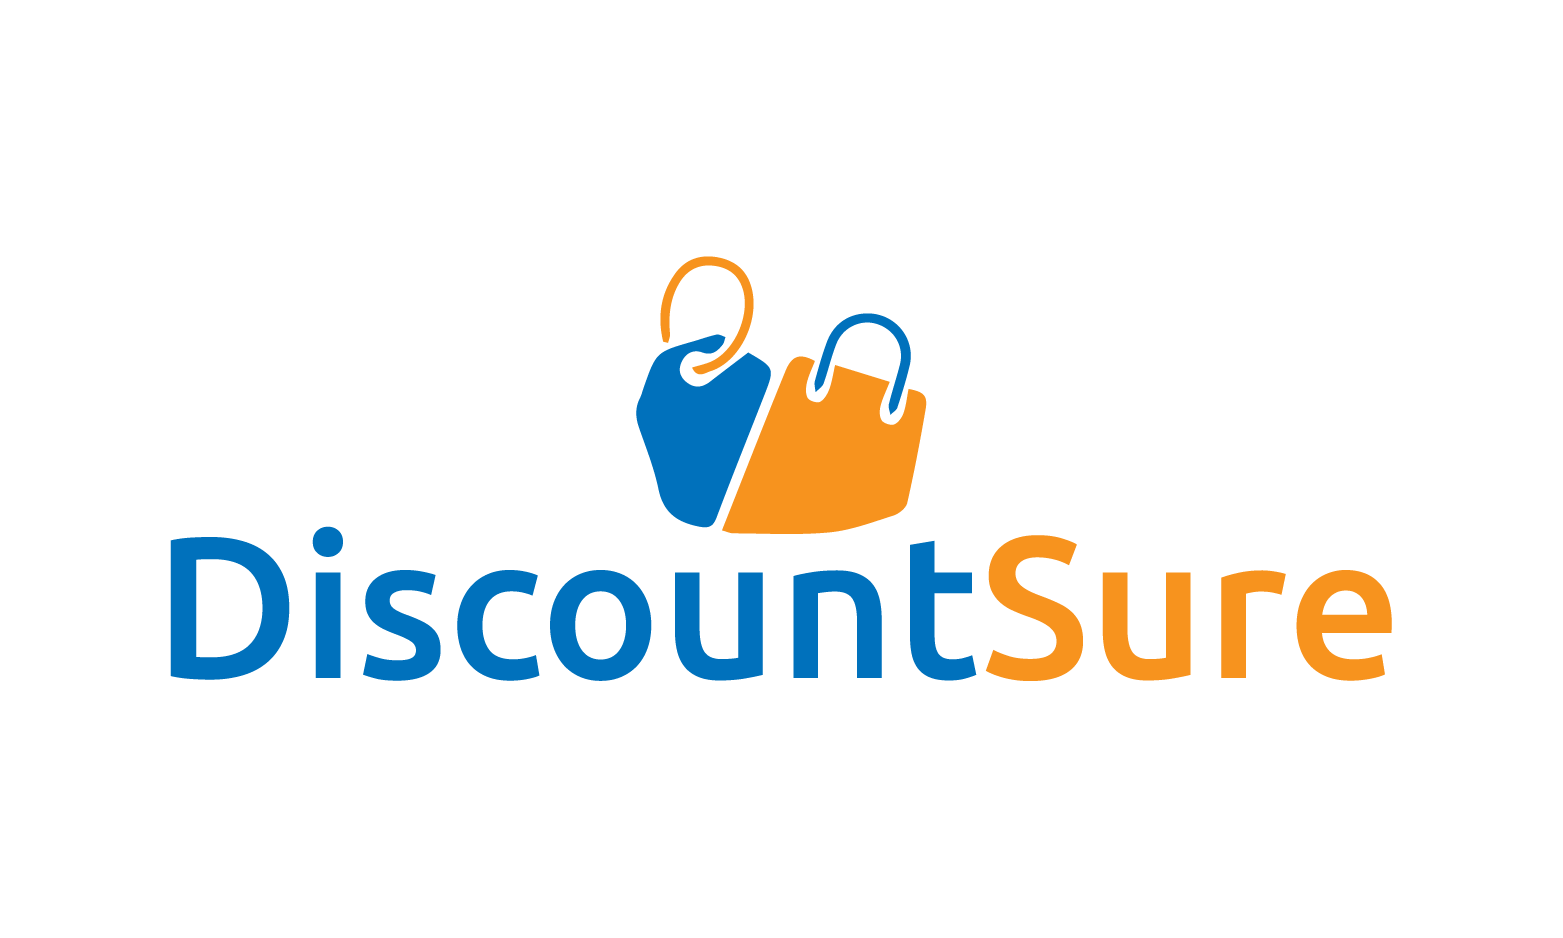 DiscountSure.com - Creative brandable domain for sale